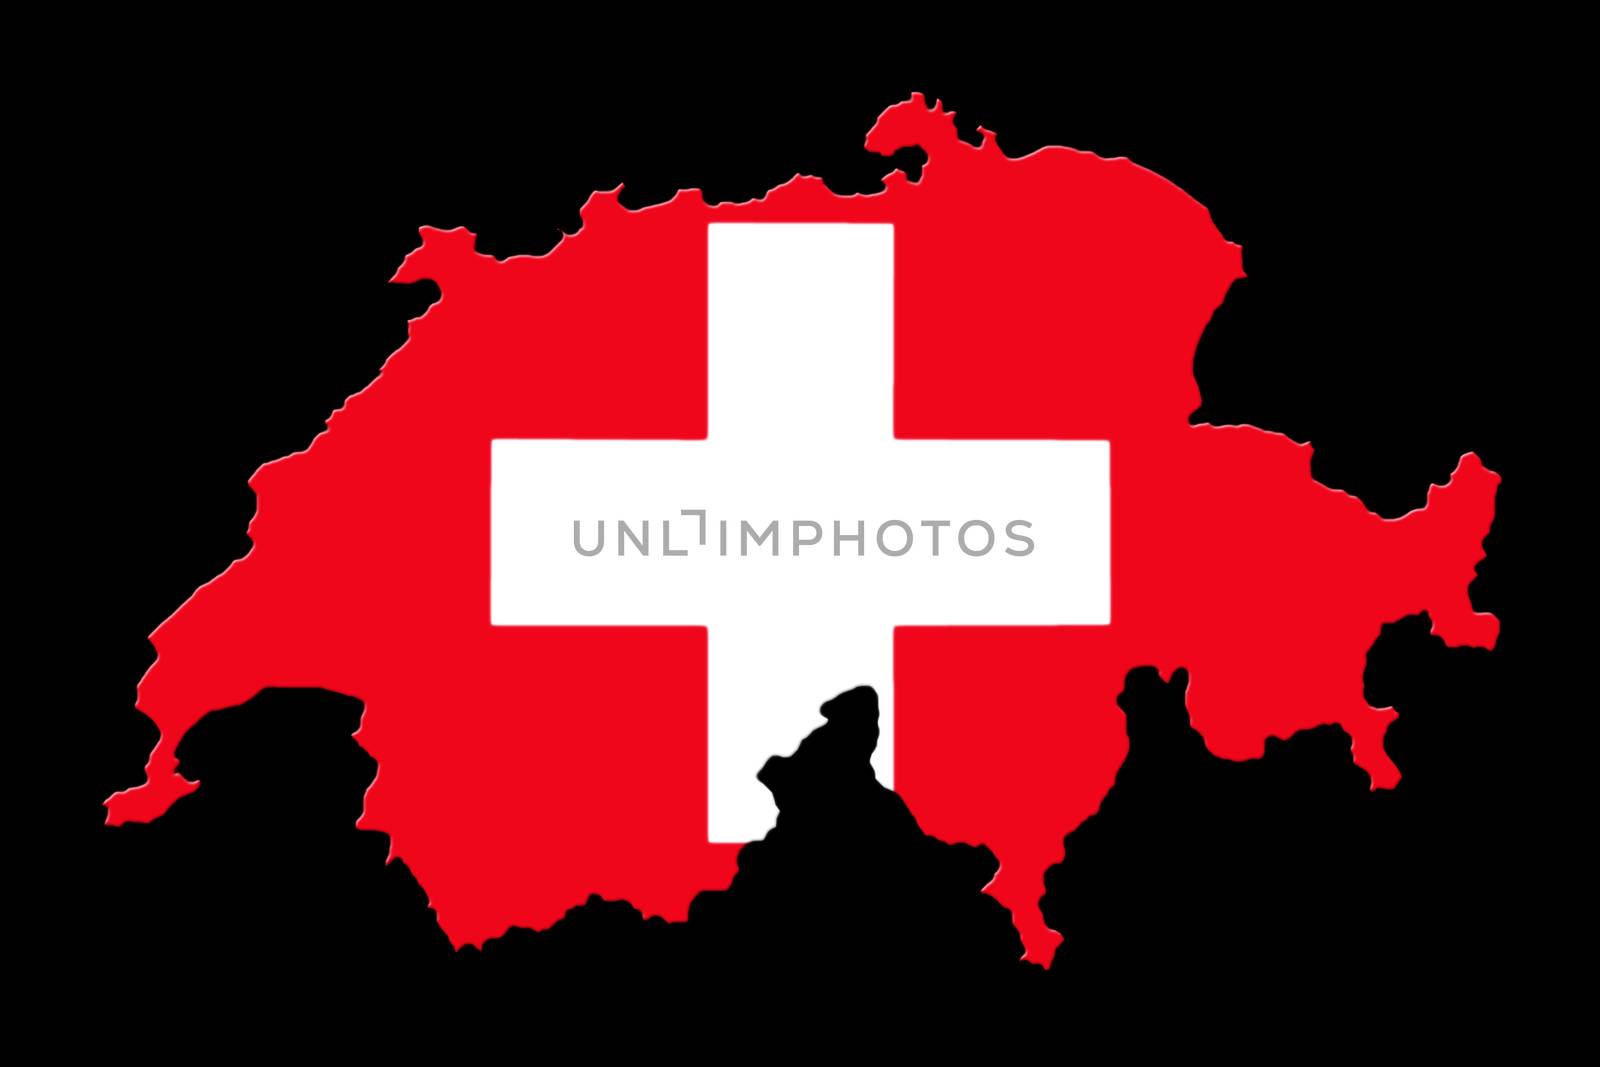 Map Of Switzerland And Flag On Black Background